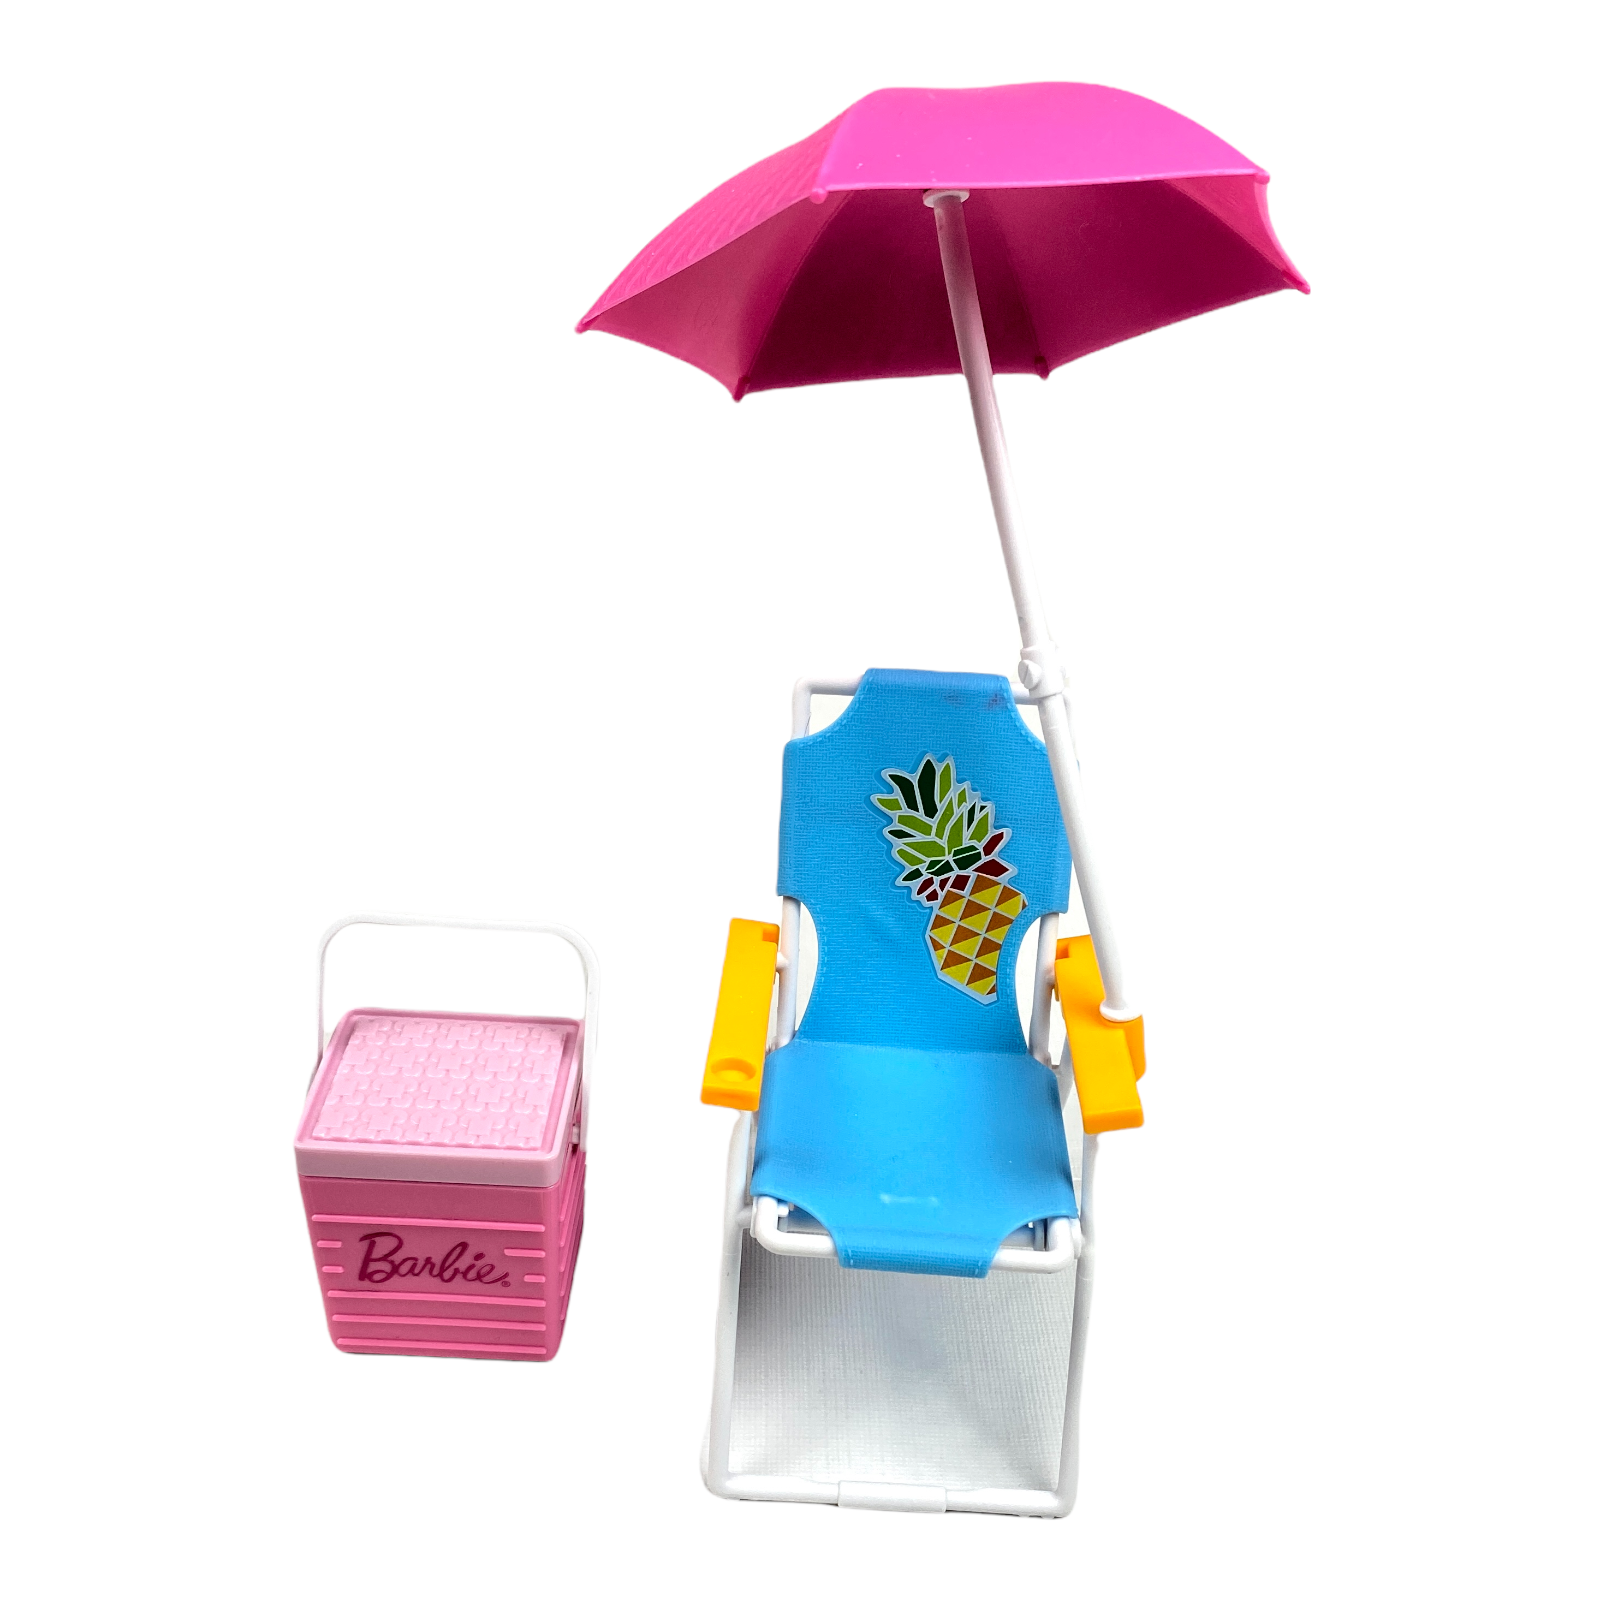 Mattel Barbie Picnic Poolside Fun Outdoor Beach Chair Umbrella C